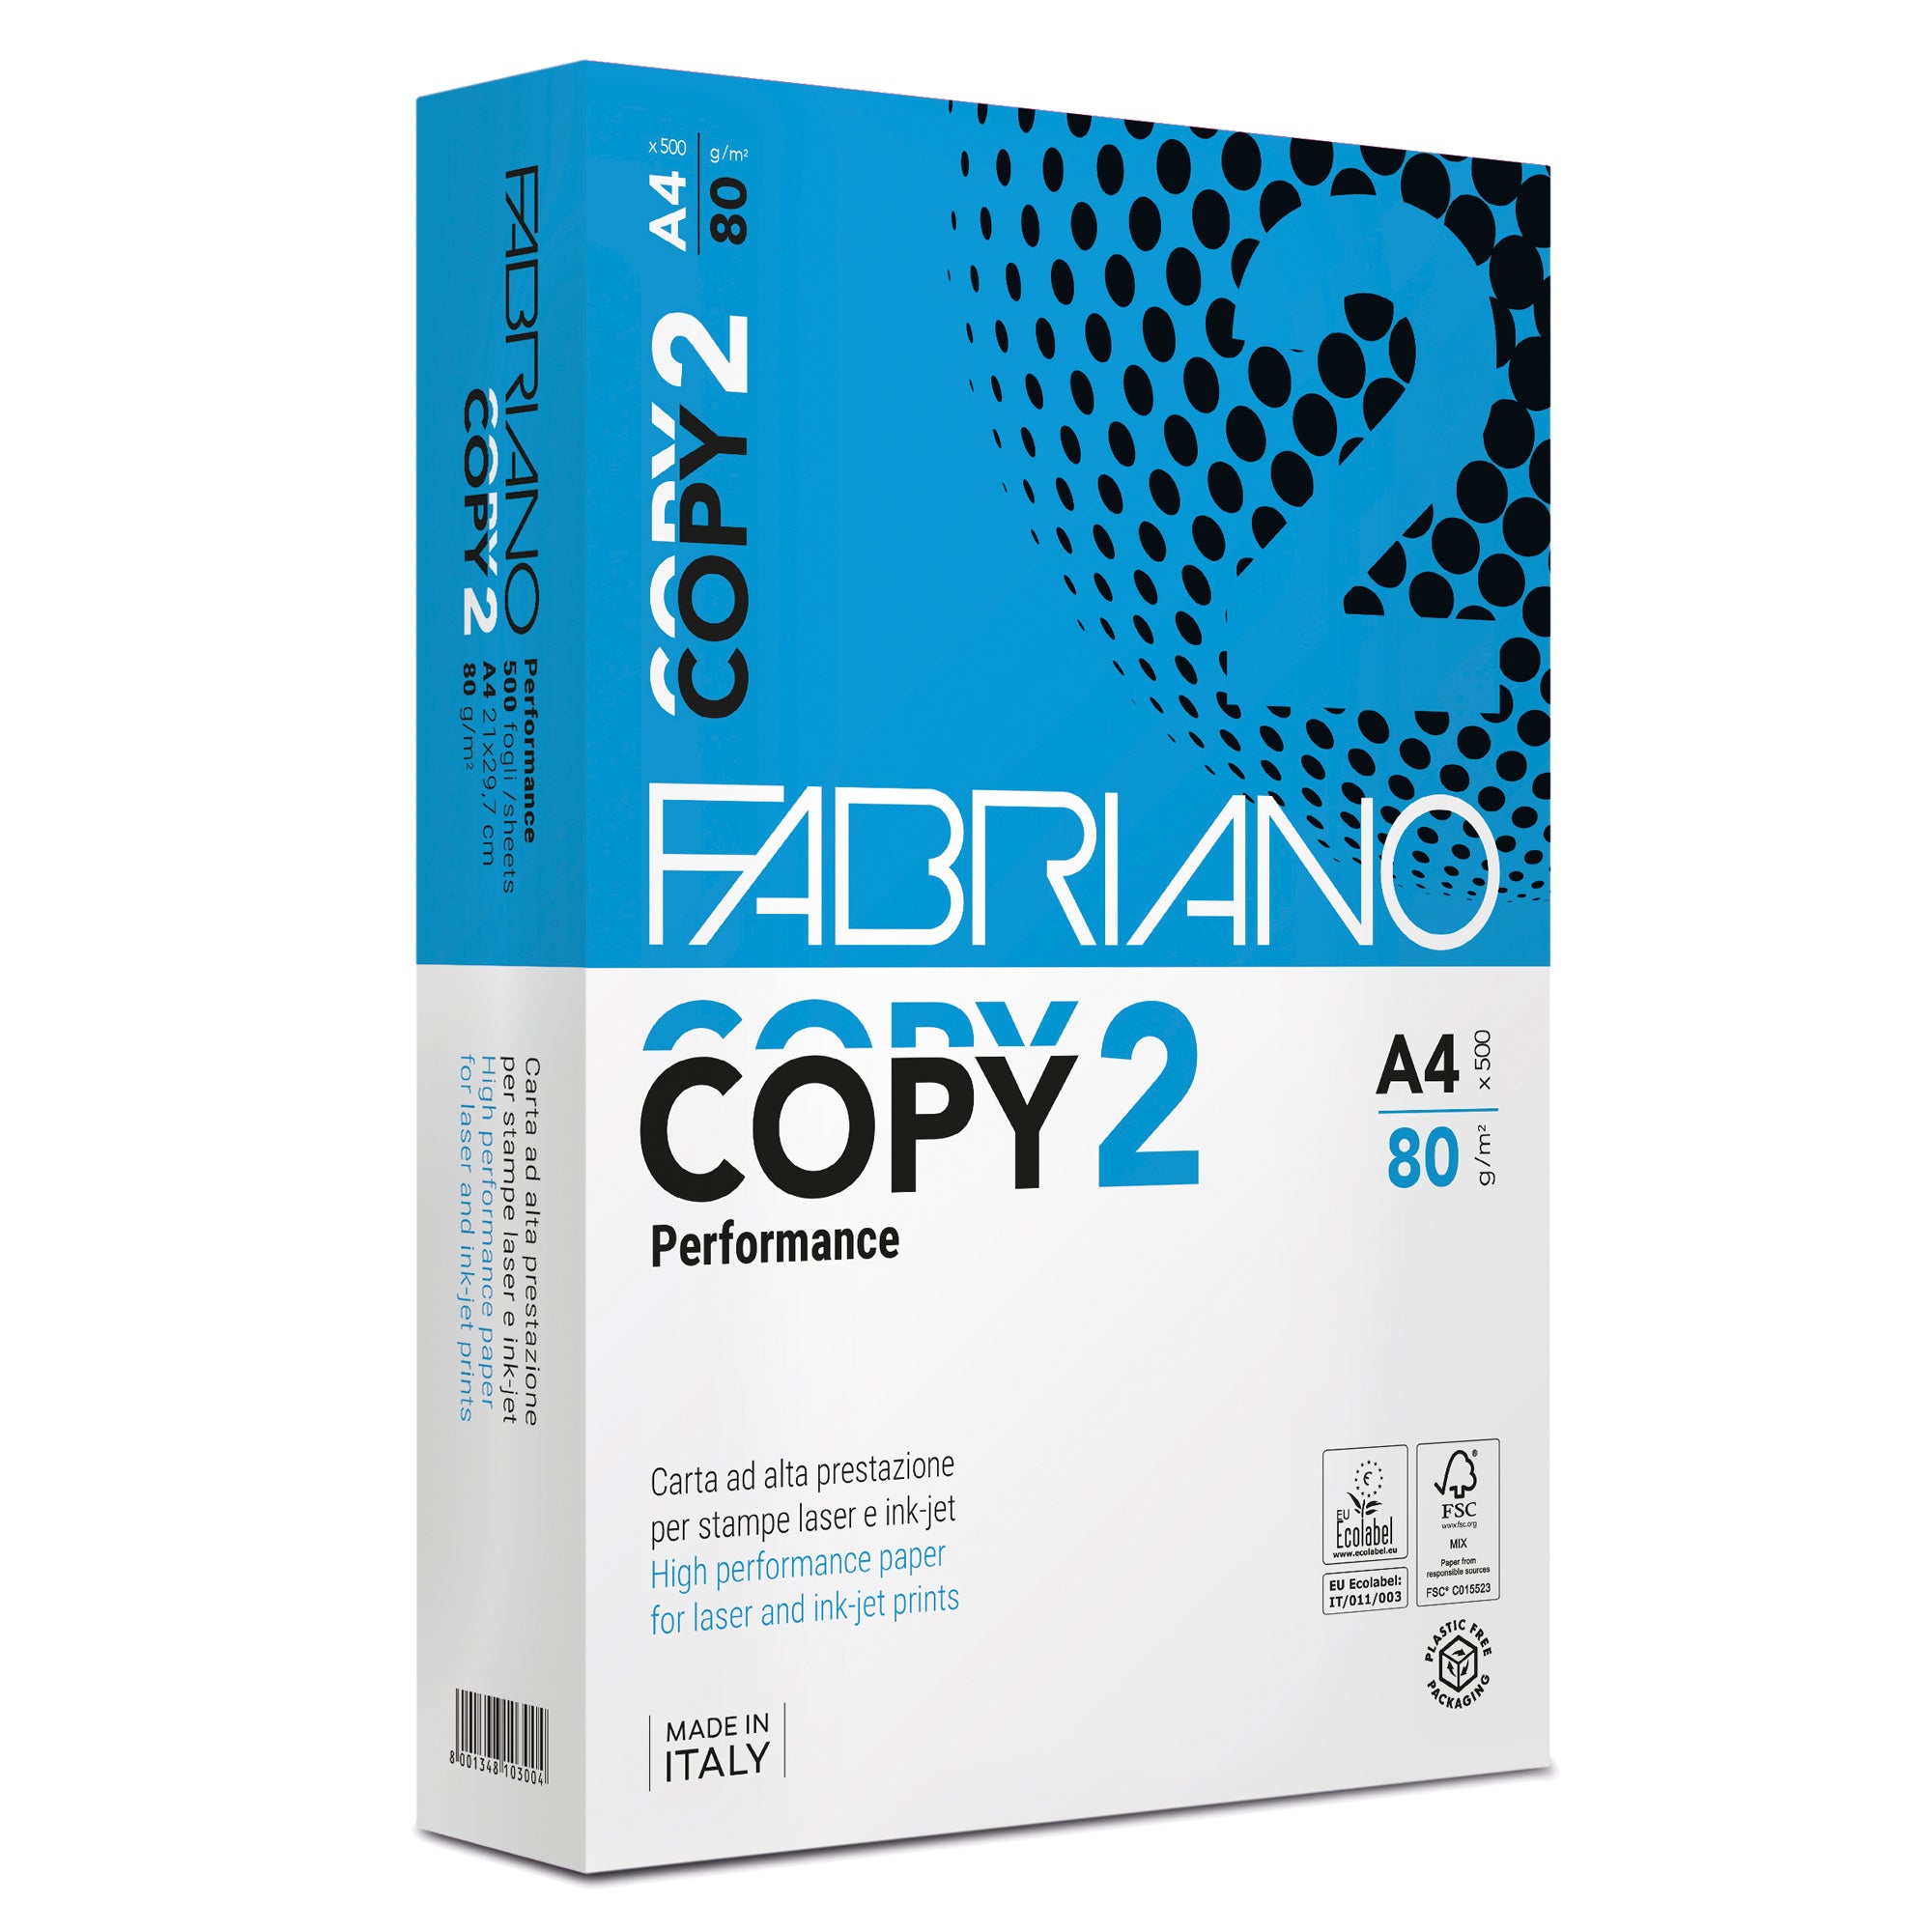 fabriano-carta-copy2-a4-80gr-500fg-performance